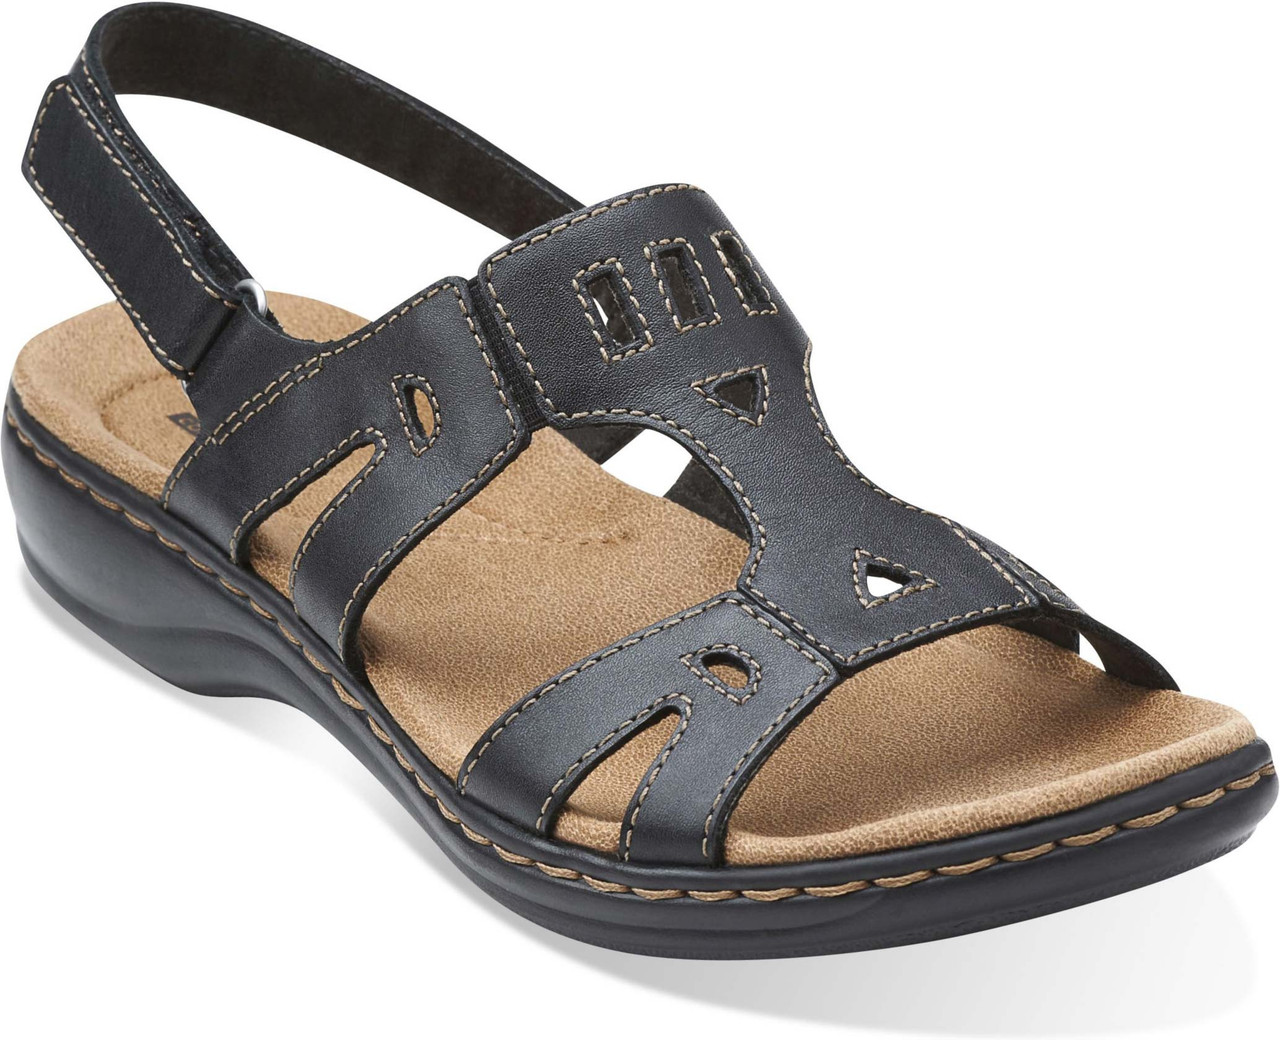 clarks women's sandals leather